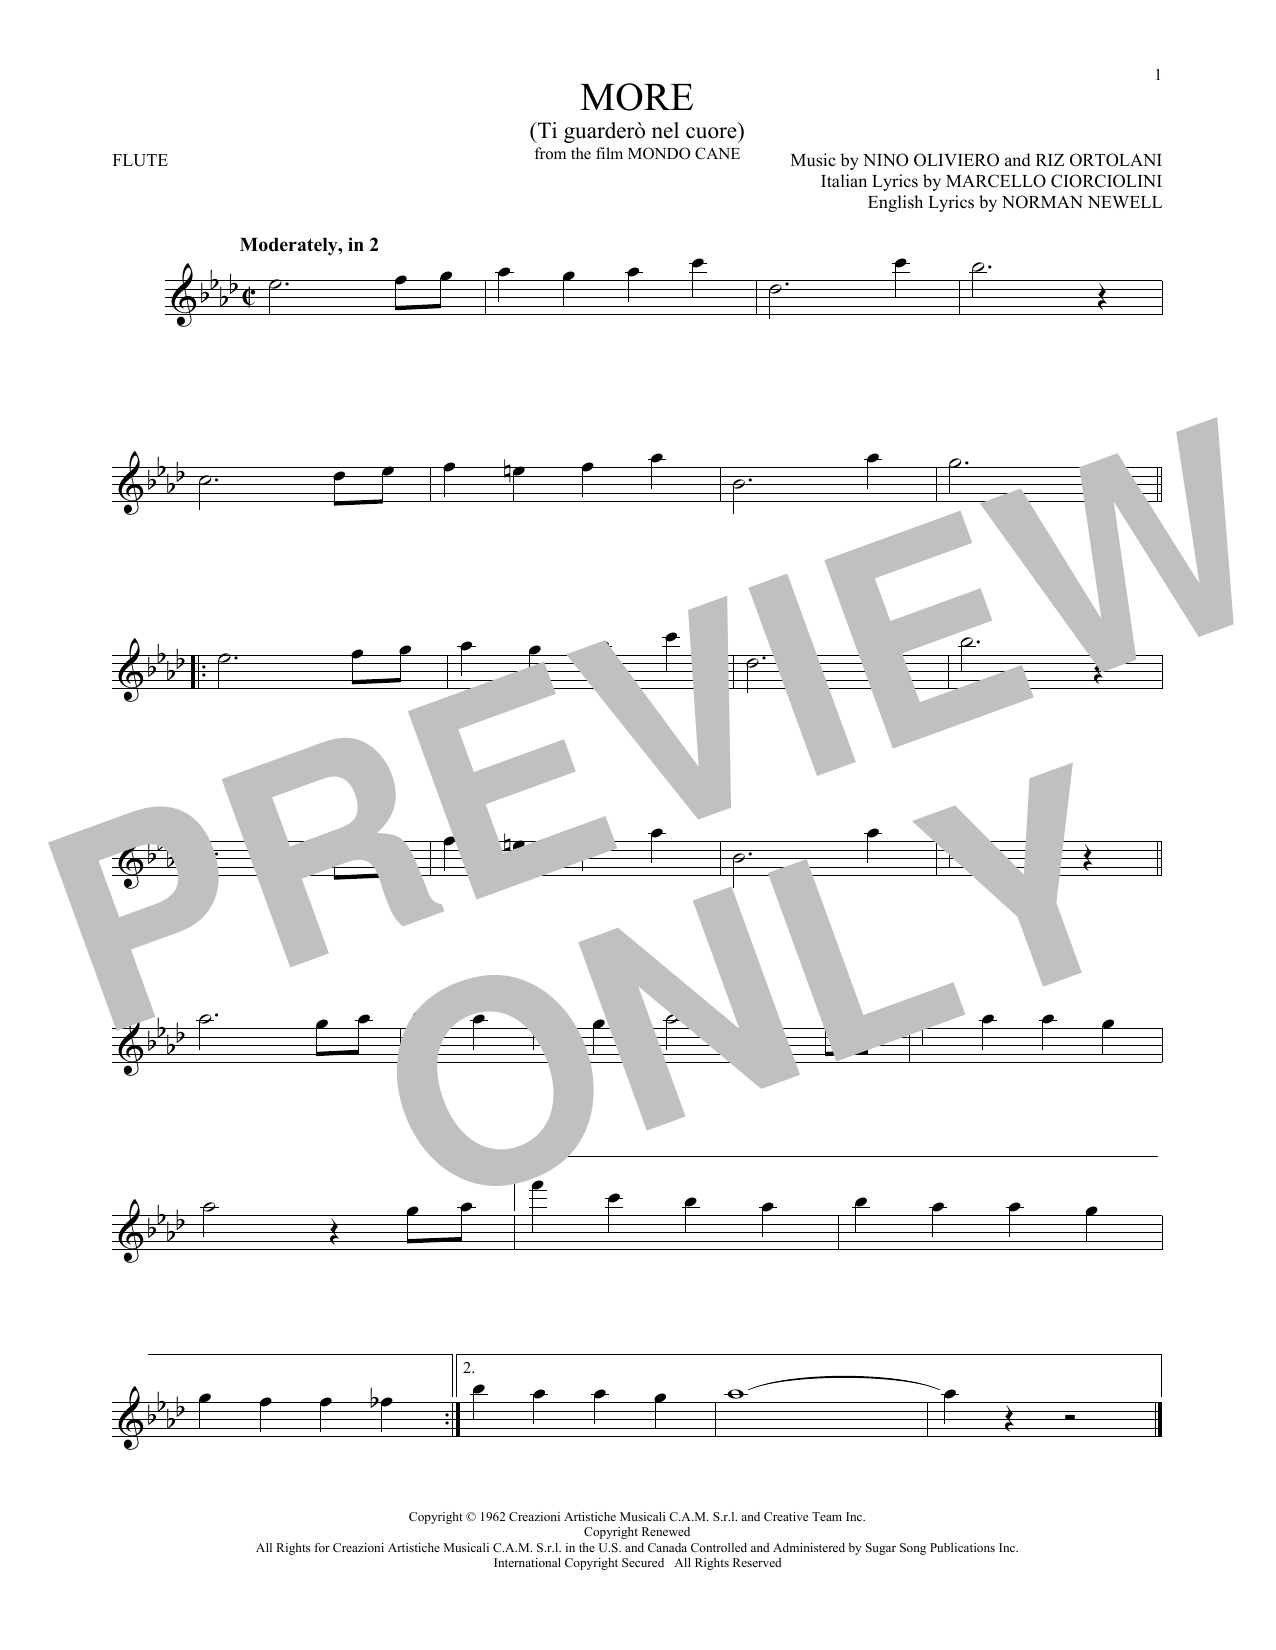 Download Nino Oliviero More (Ti Guardero Nel Cuore) Sheet Music and learn how to play Cello PDF digital score in minutes